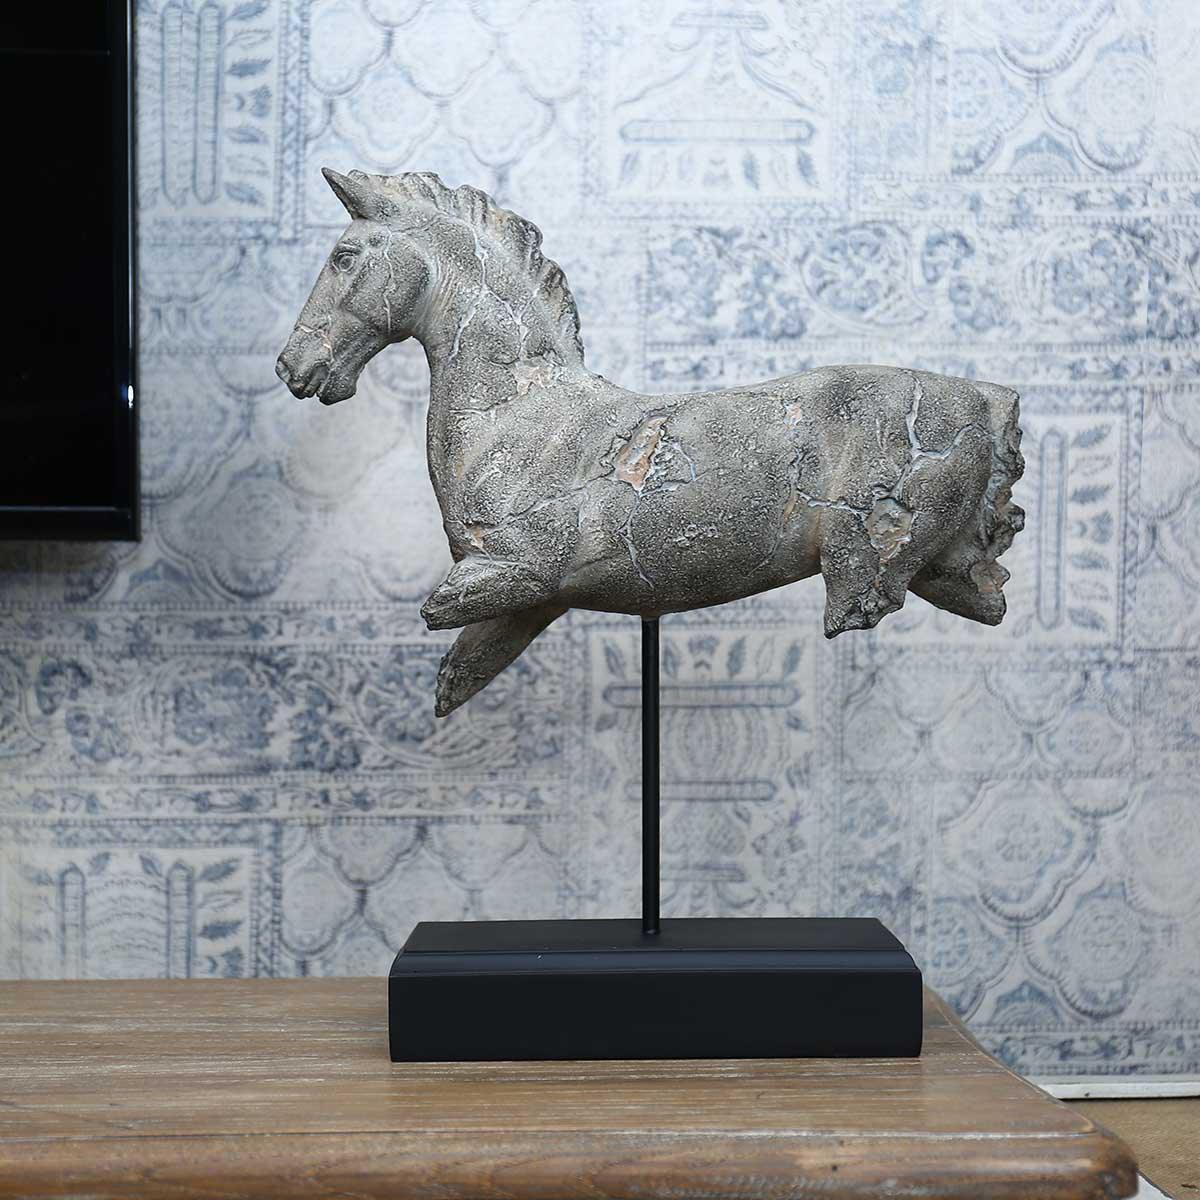 Graceful Gallop Incomplete Horse Sculpture: Elegant Art Decor